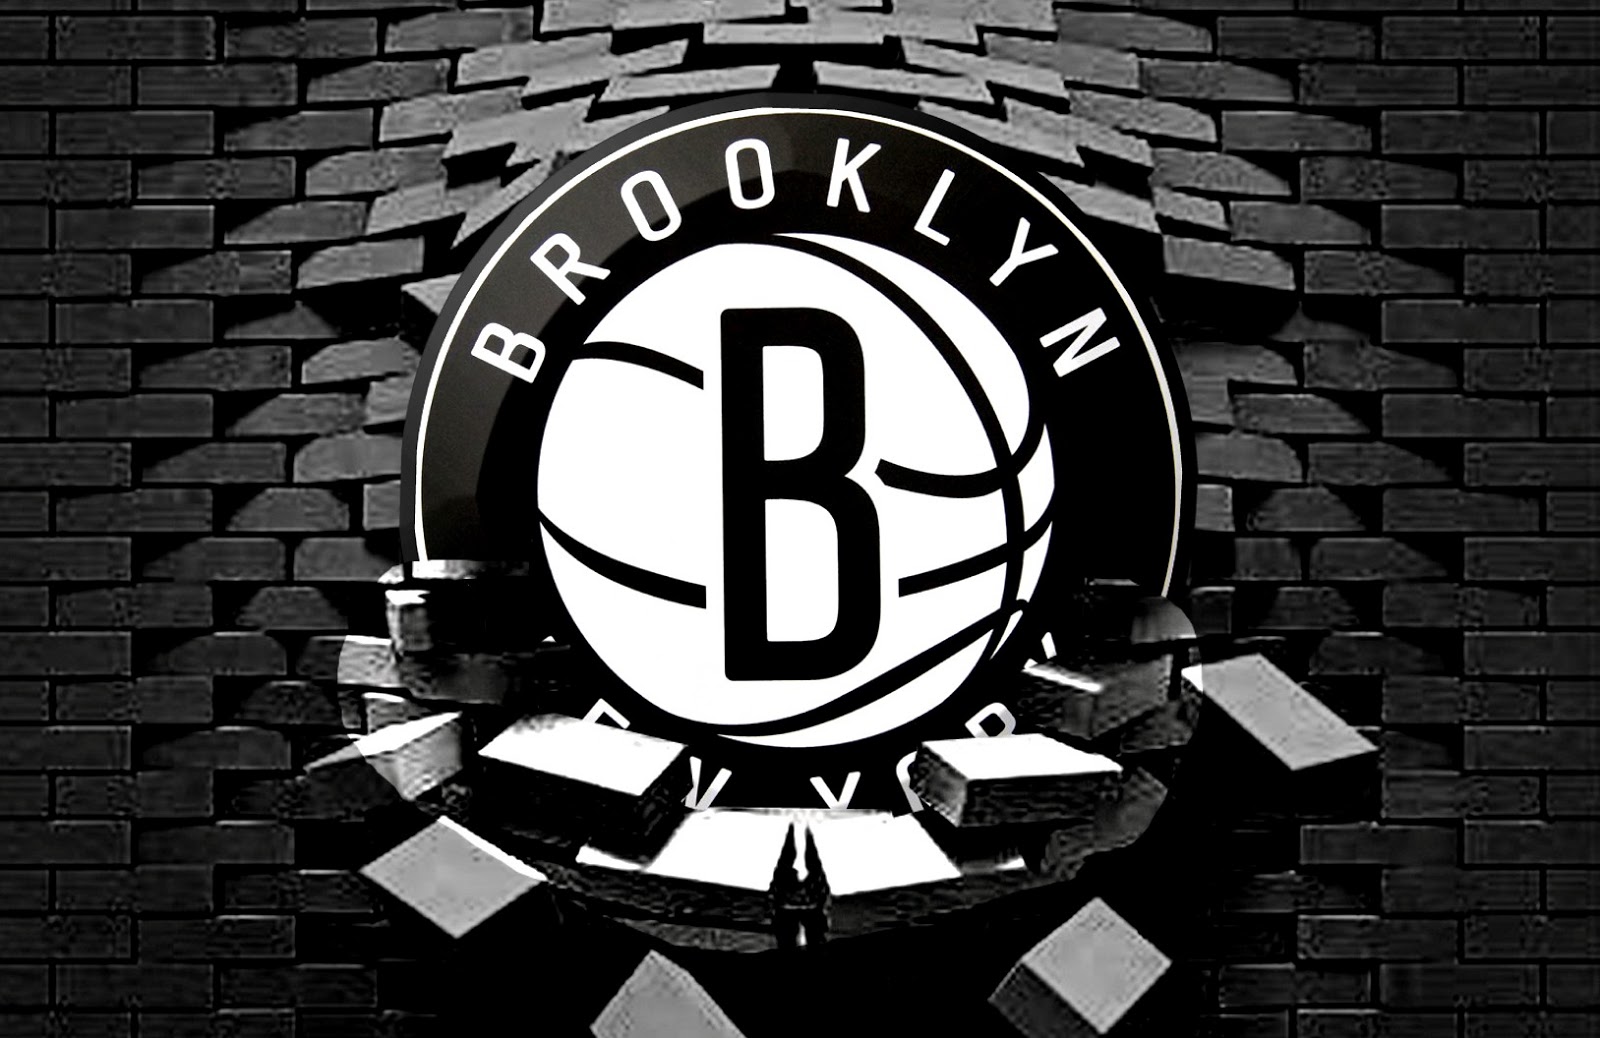 Cool Brooklyn Nets Wallpaper 17921 16001038 px fond ecran